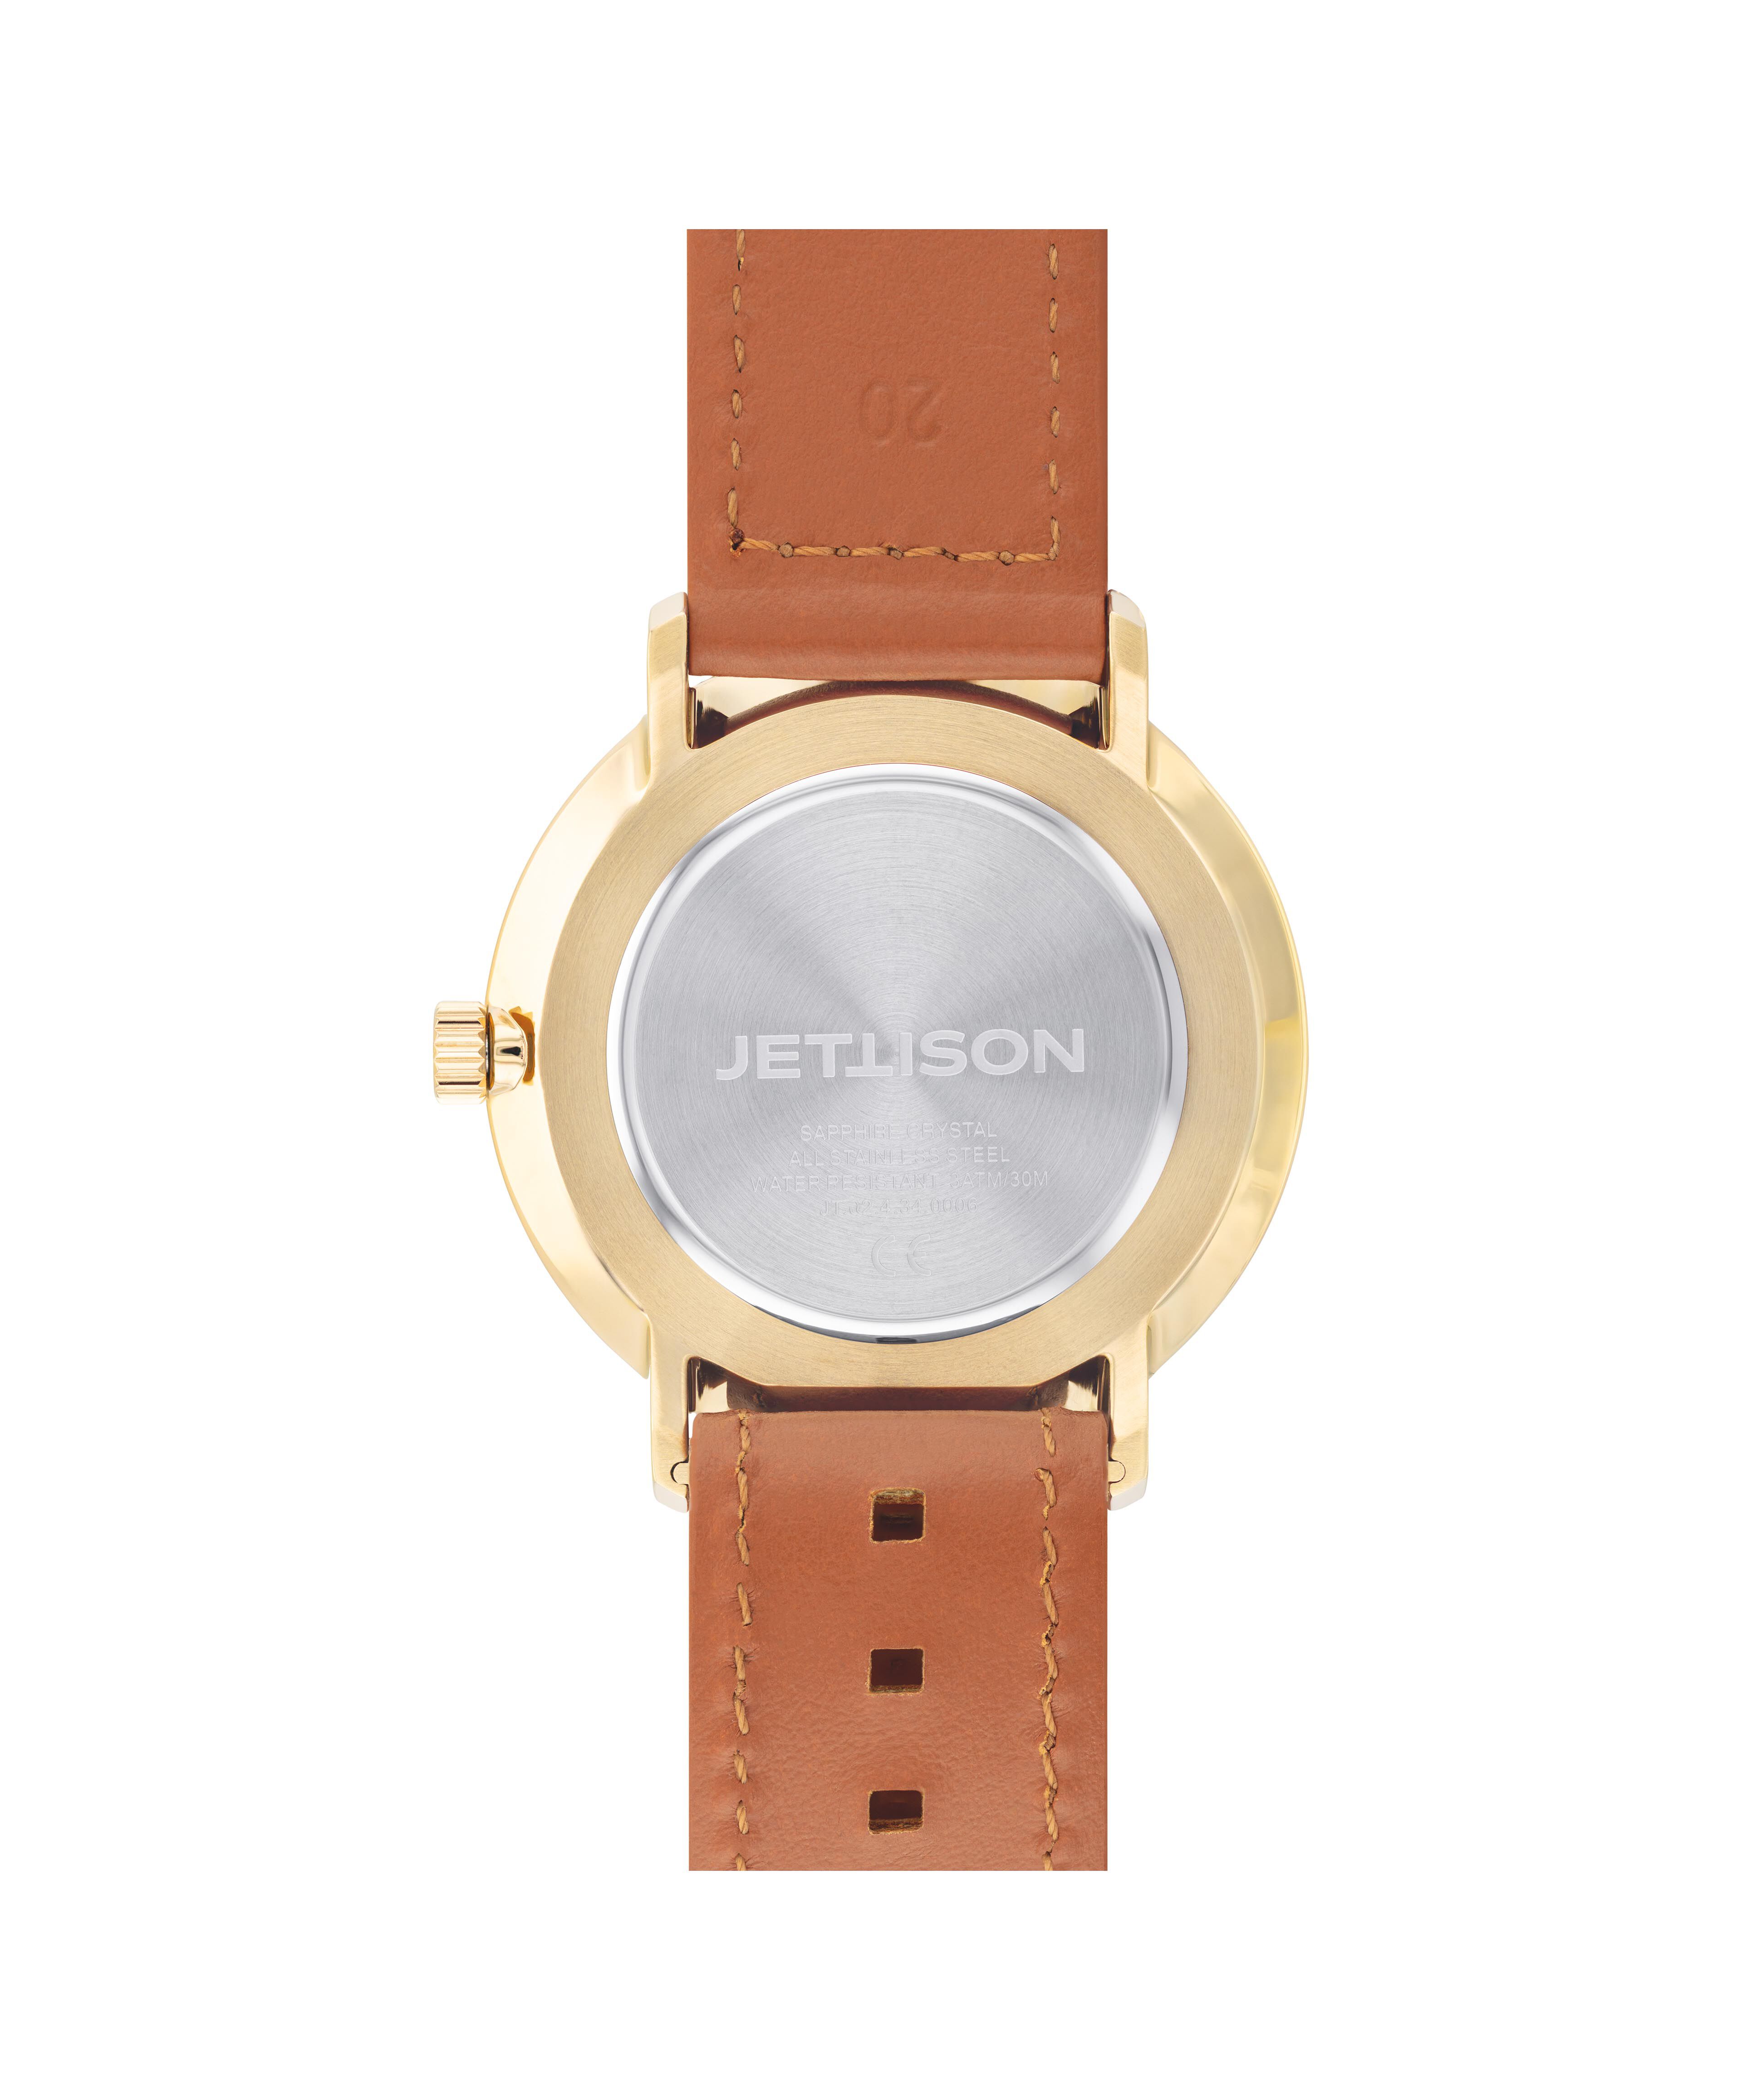 jettison watches